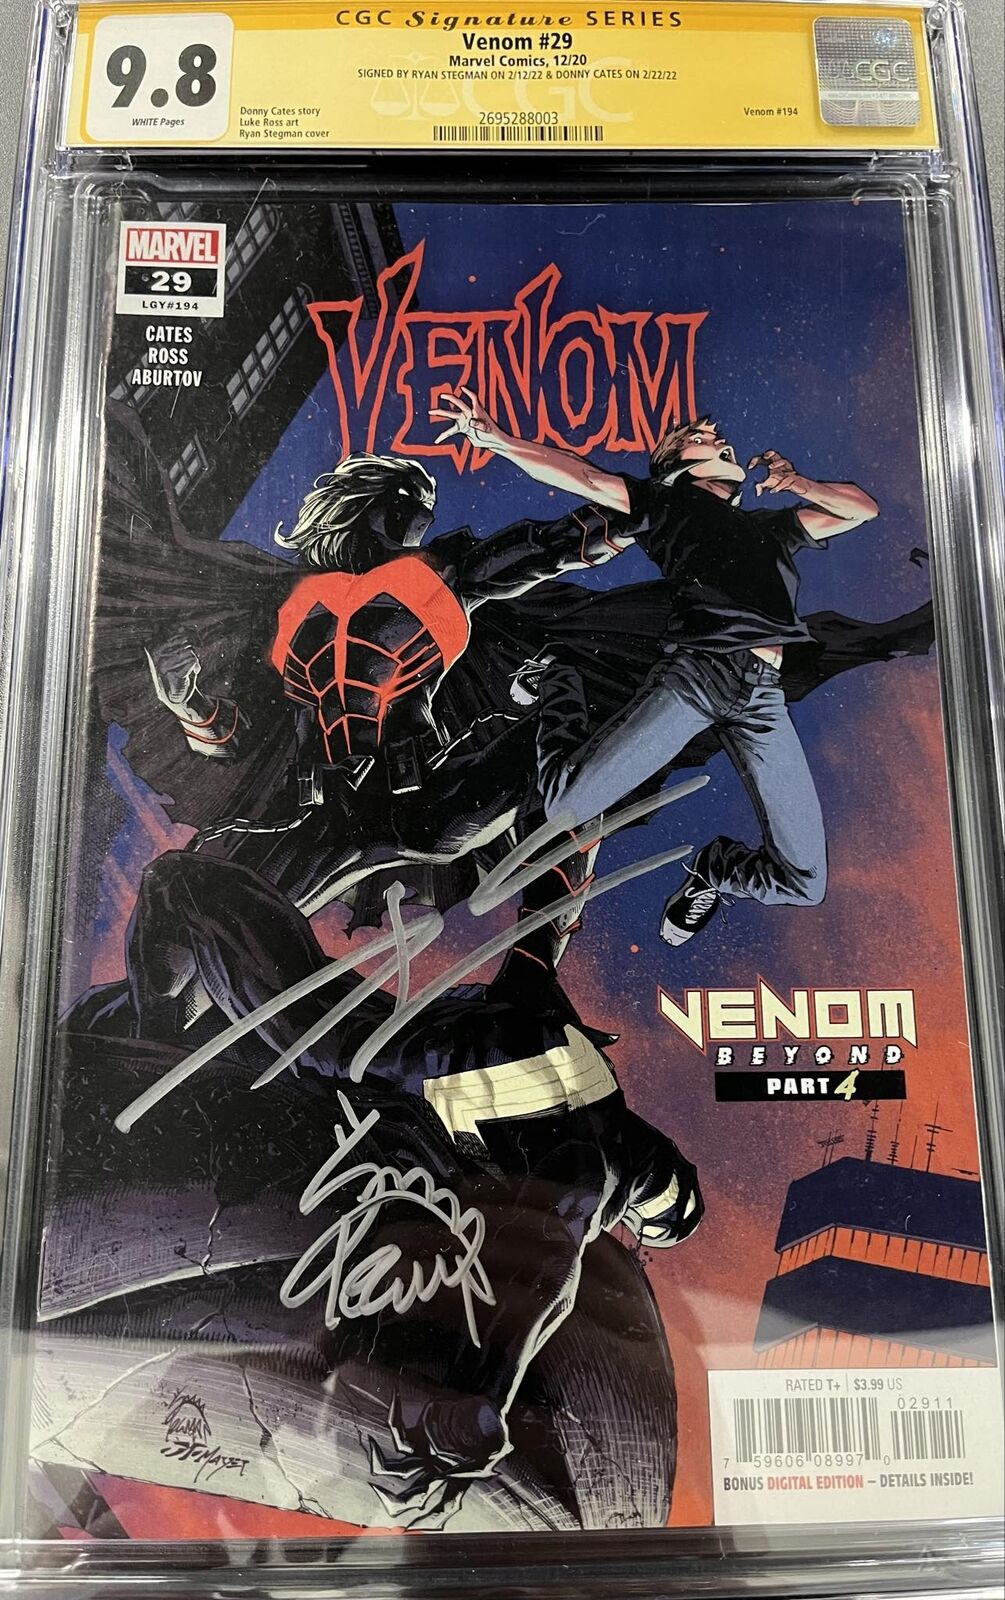 CGC Signature Series 9.8 Venom #29 Signed by Ryan Stegman & Donny Cates